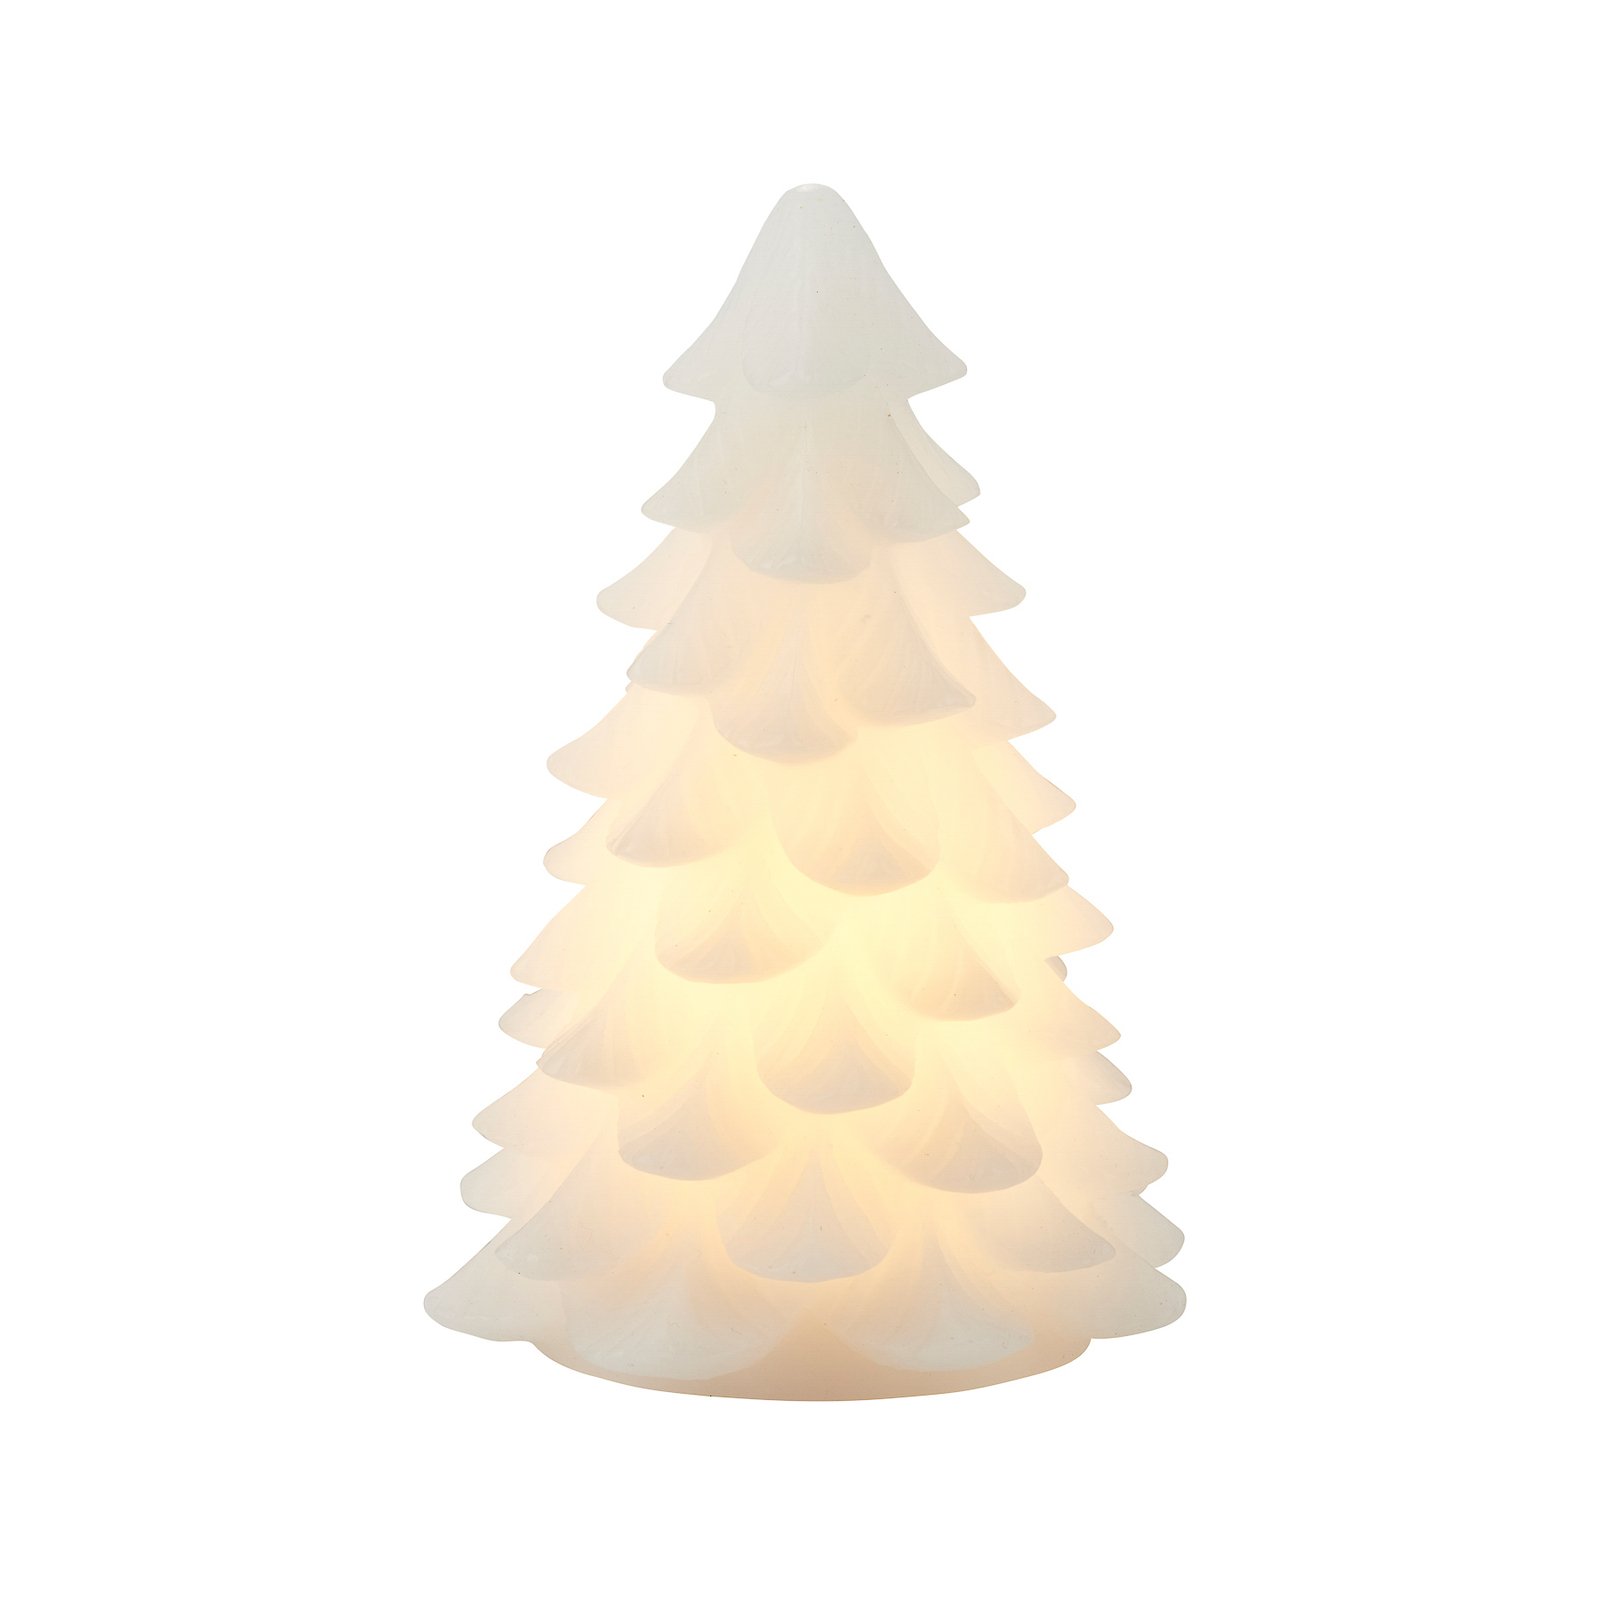 Carla LED decorative light, white wax tree 16cm